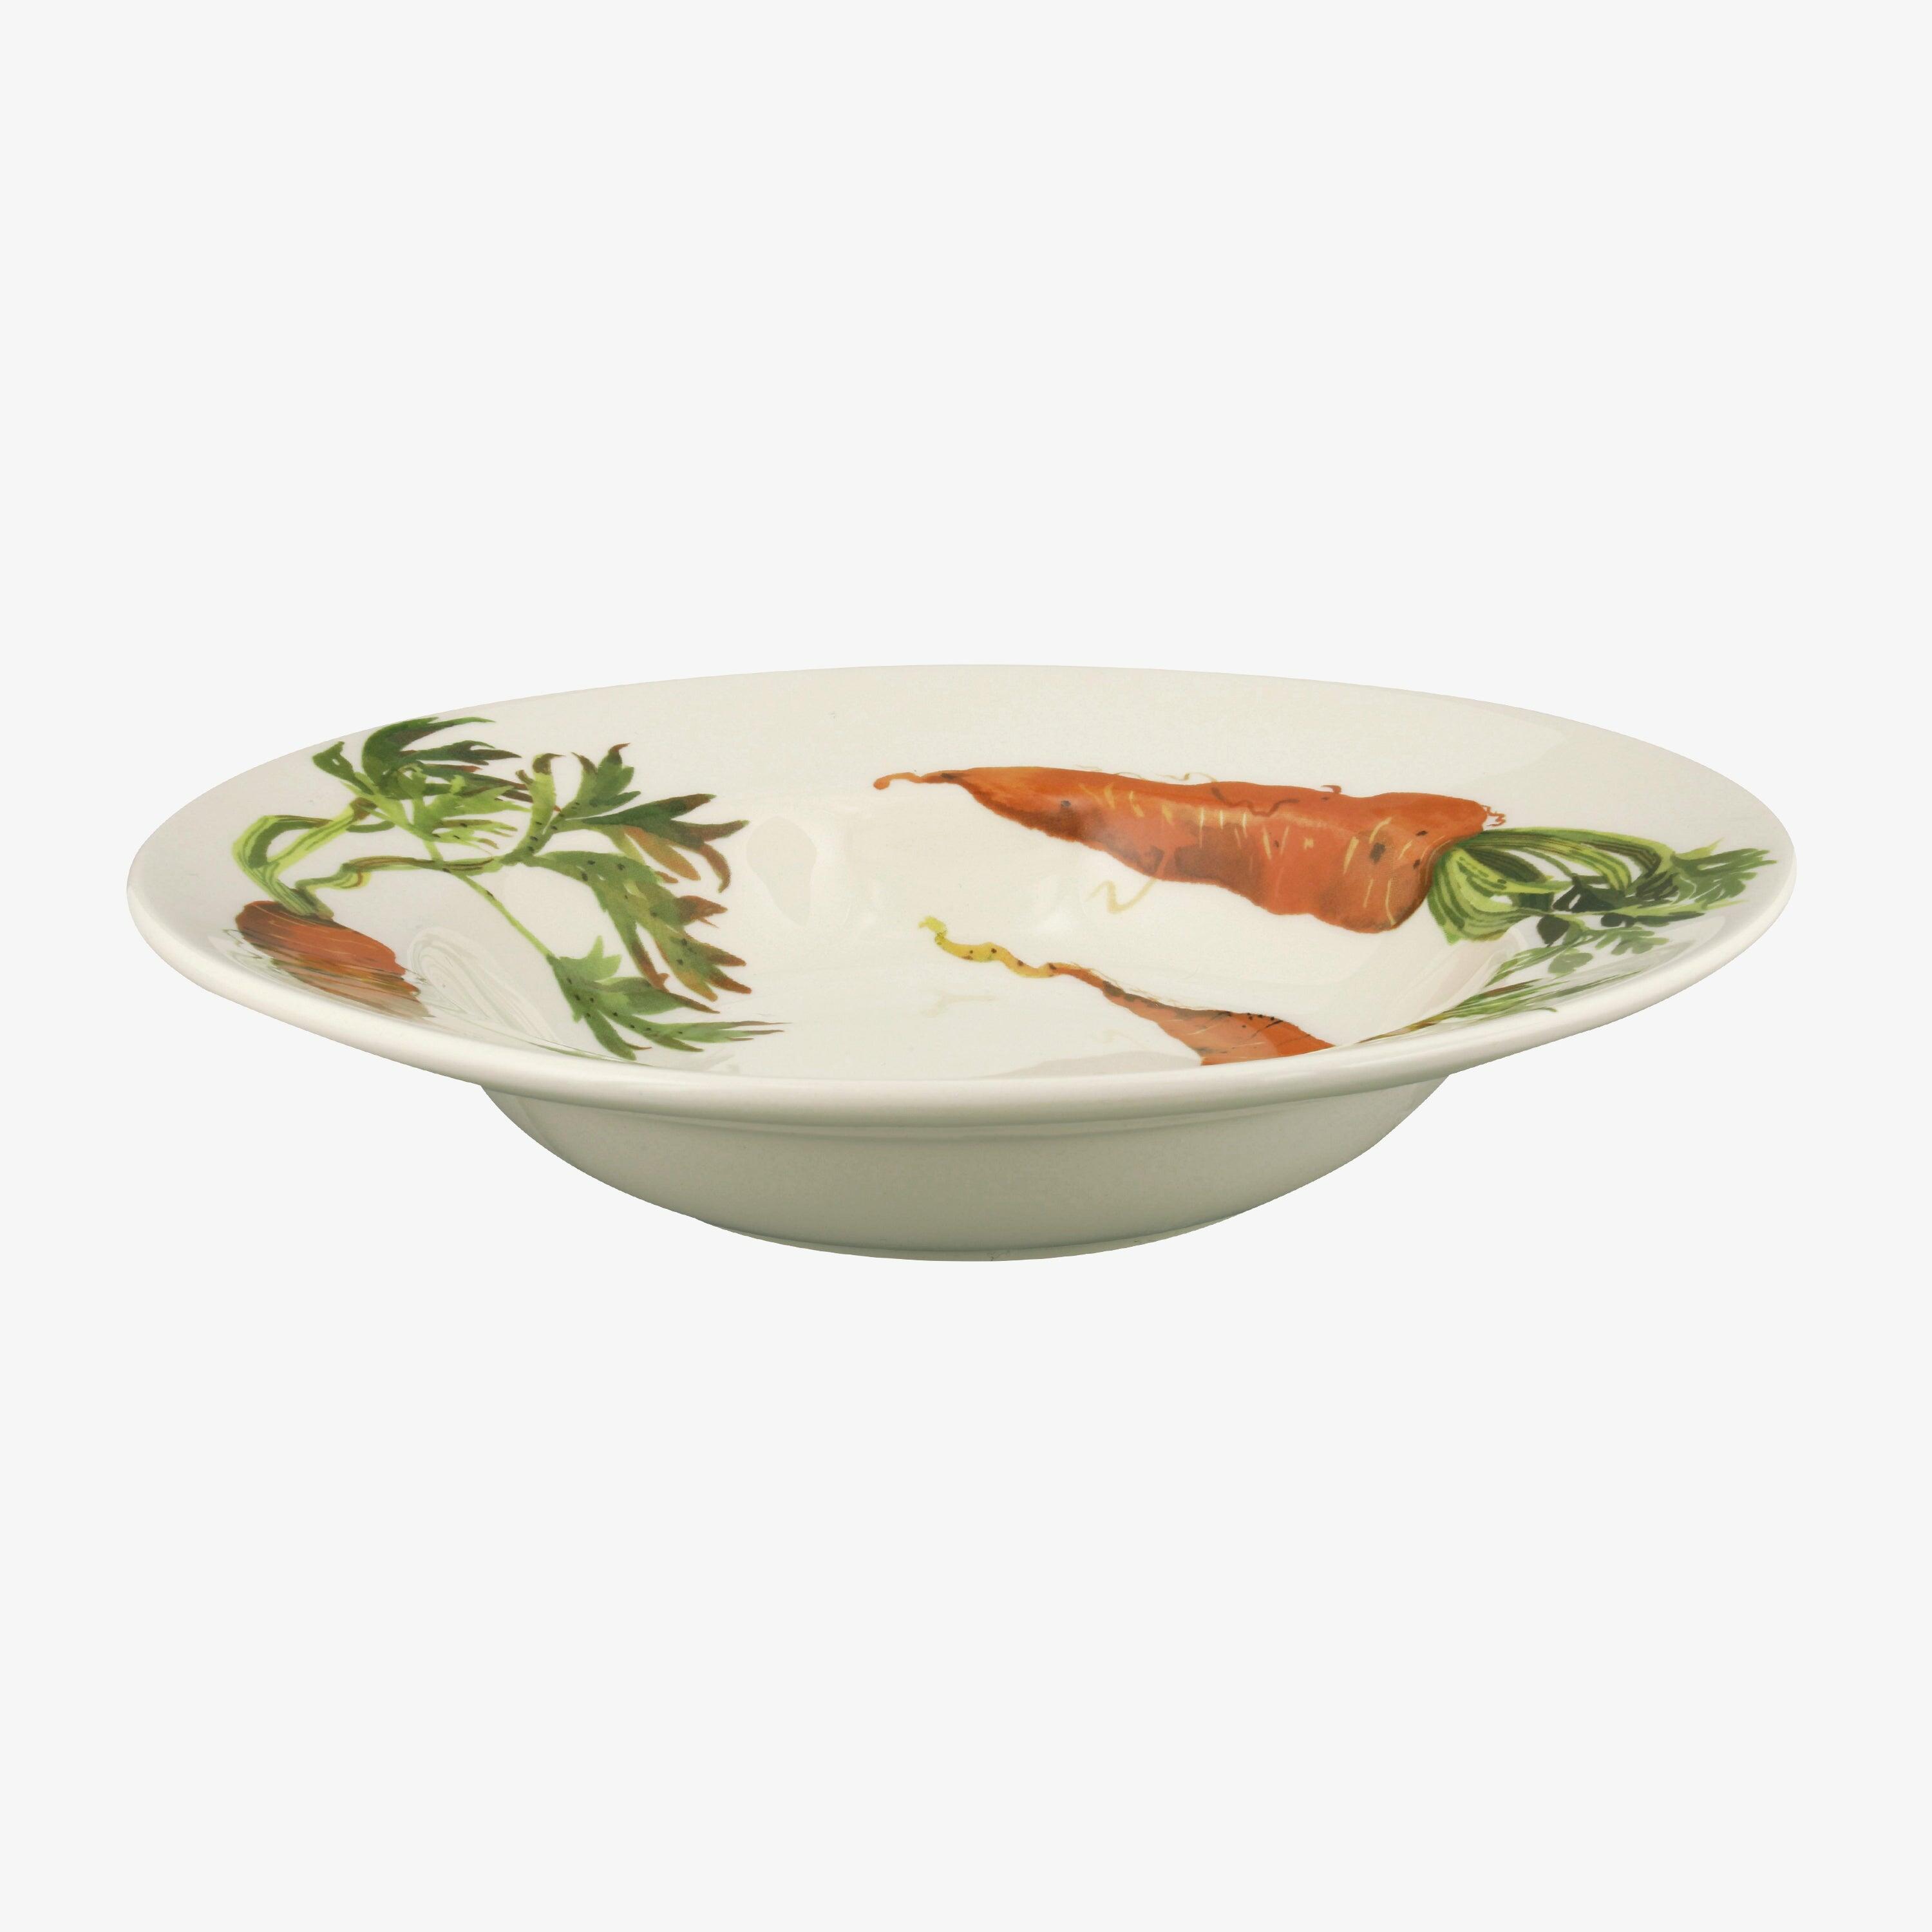 Seconds Vegetable Garden Carrots Soup Plate - Unique Handmade & Handpainted English Earthenware British-Made Pottery Plates  | Emma Bridgewater